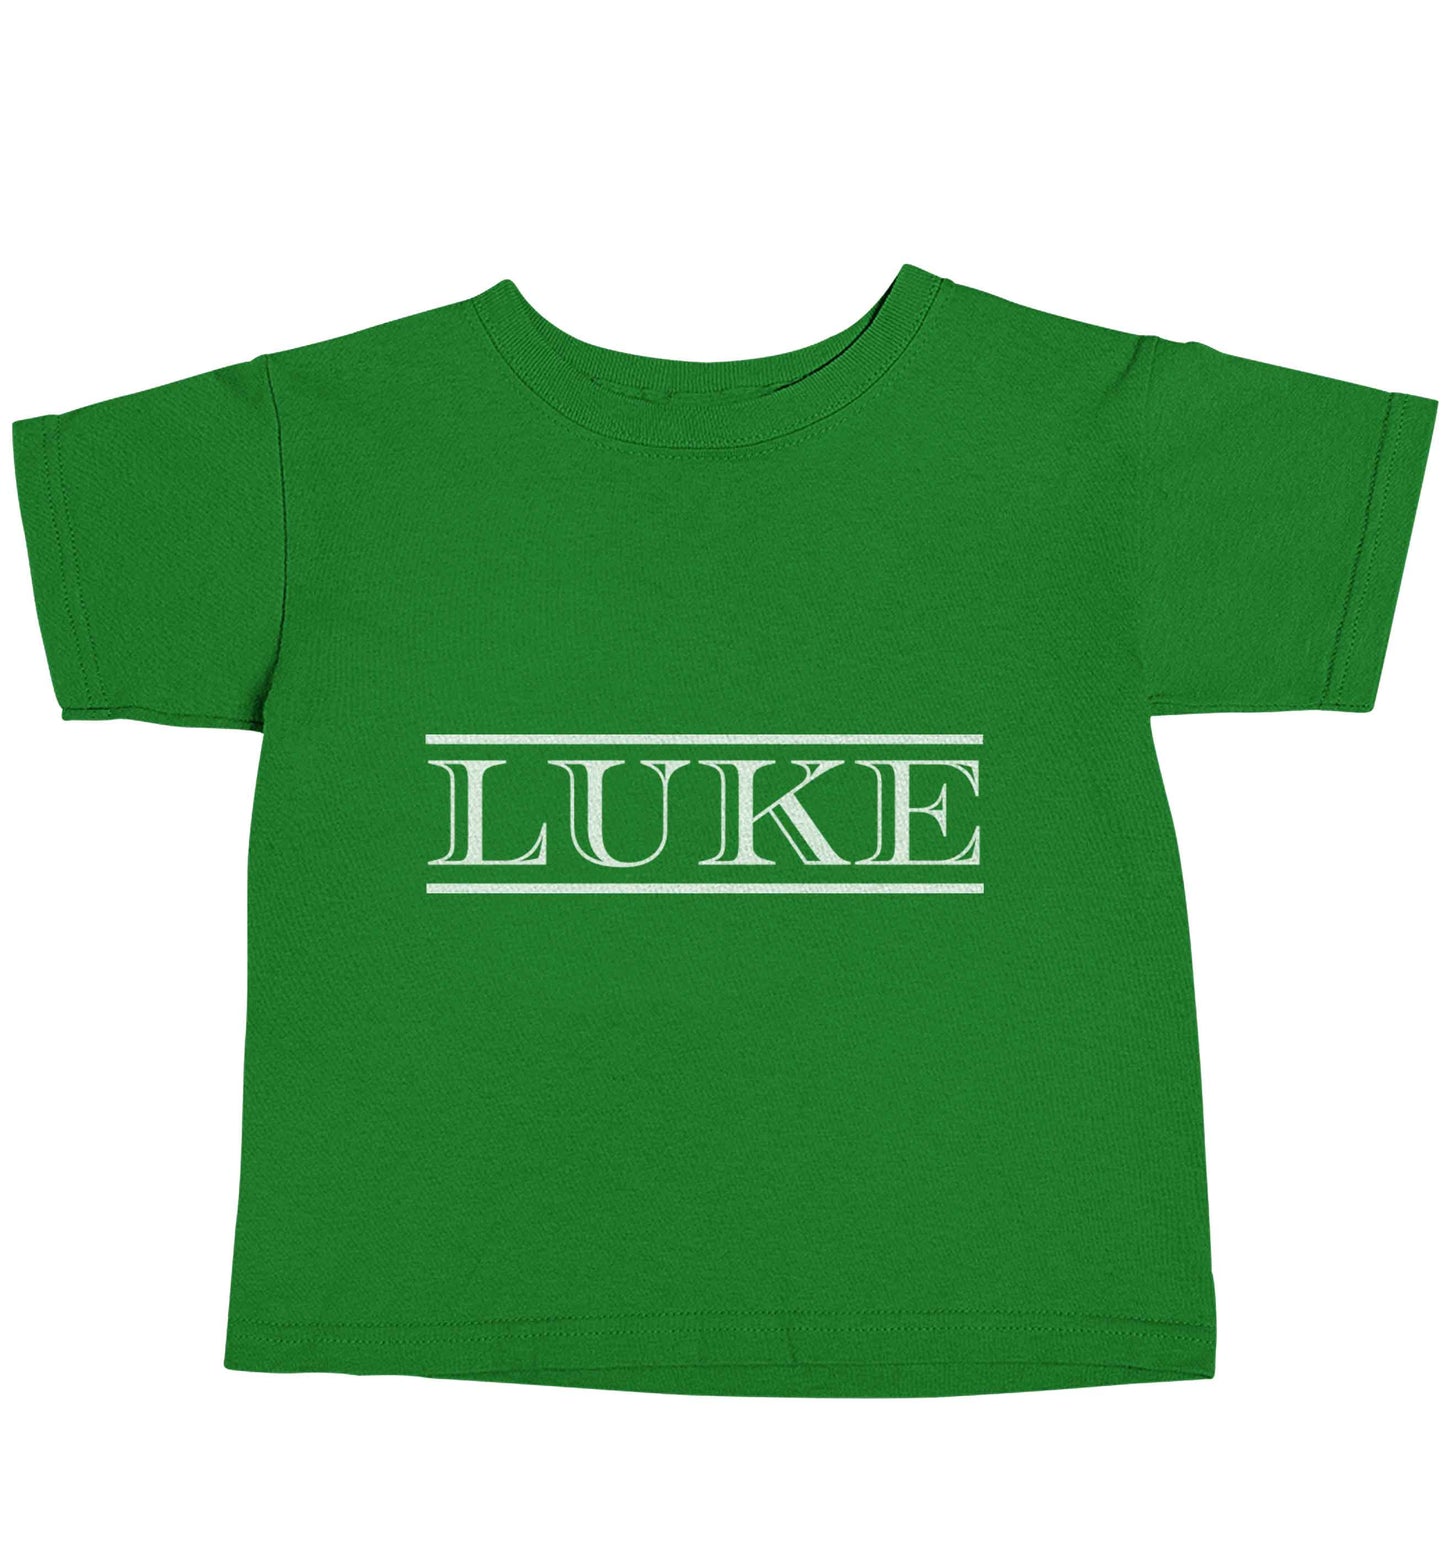 Personalised name green baby toddler Tshirt 2 Years